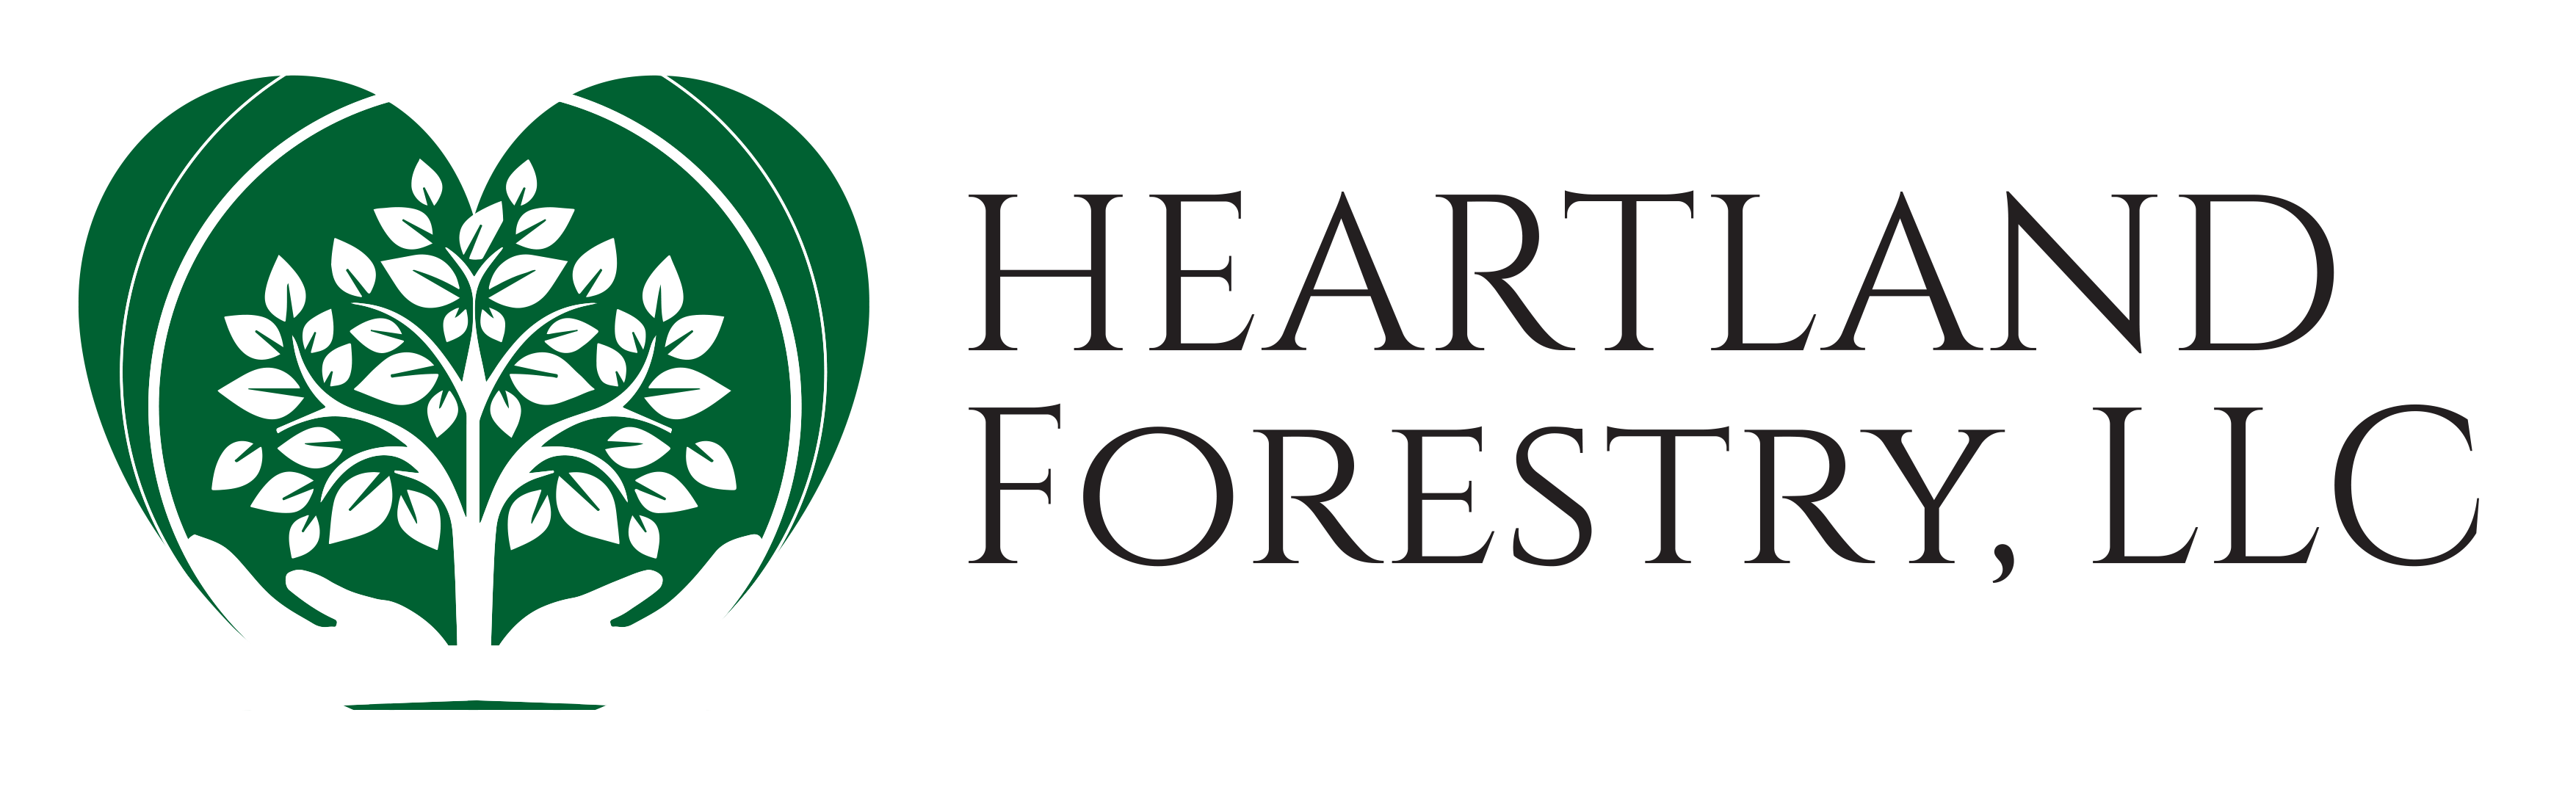 Heartland Forestry, LLC